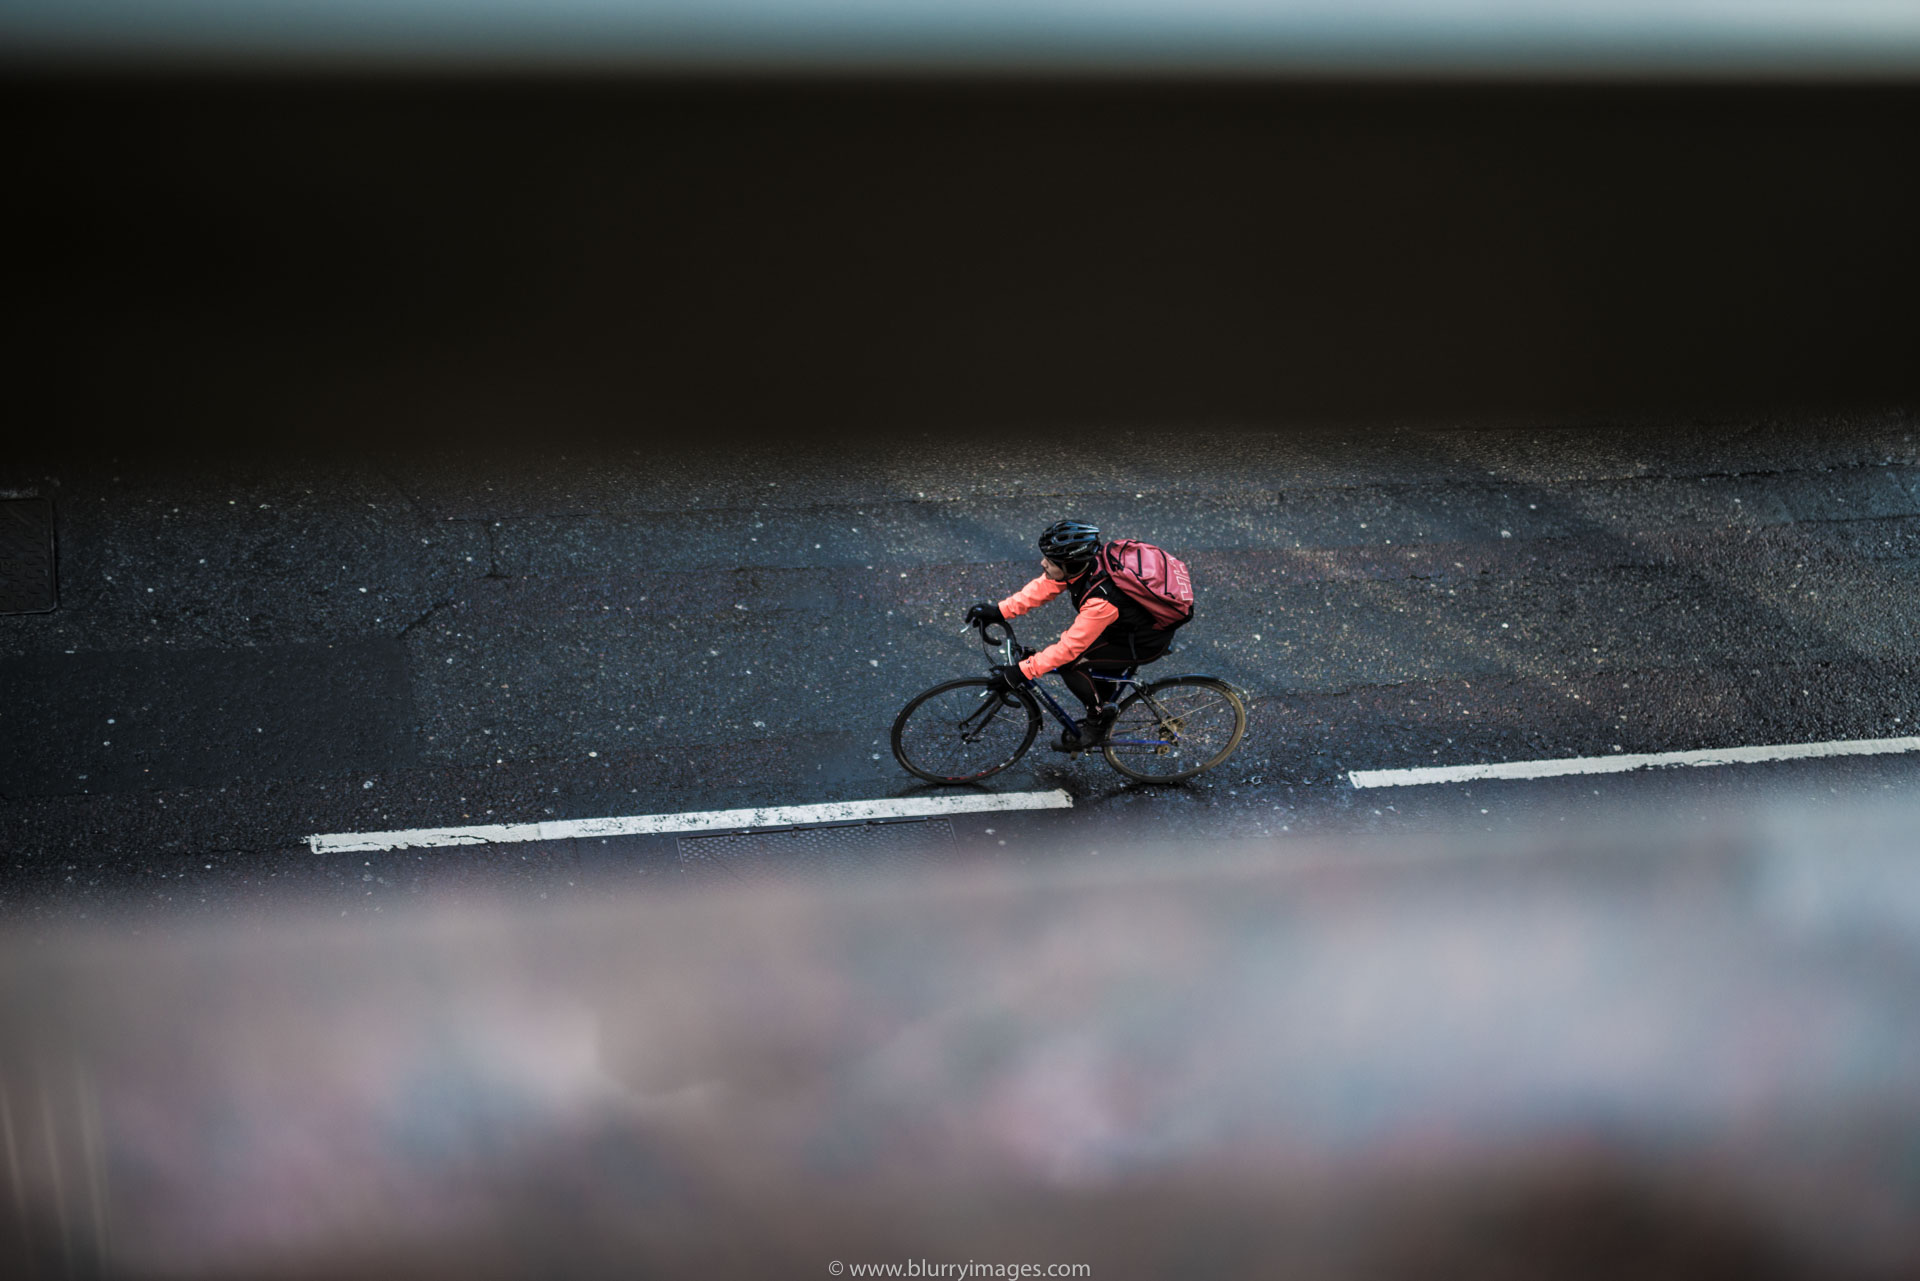 2016, man on bike, riding bike, black jacket, orange jacket, black bike, black fence, through the fence, red backpack,